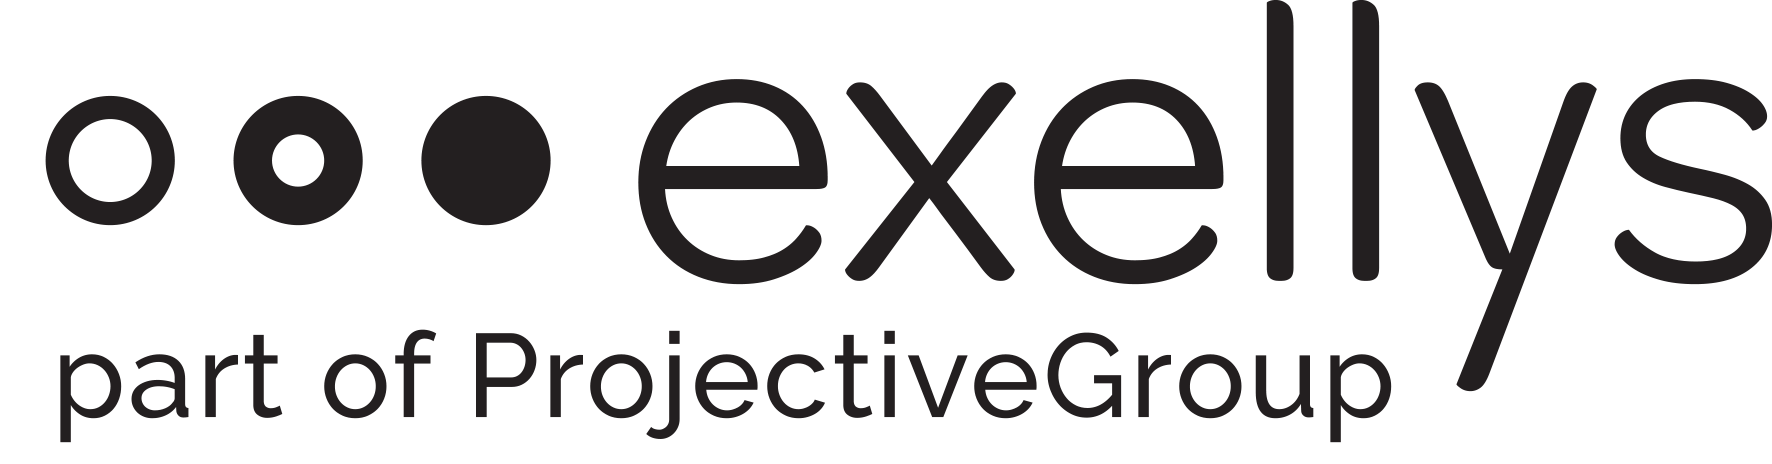 Exellys logo